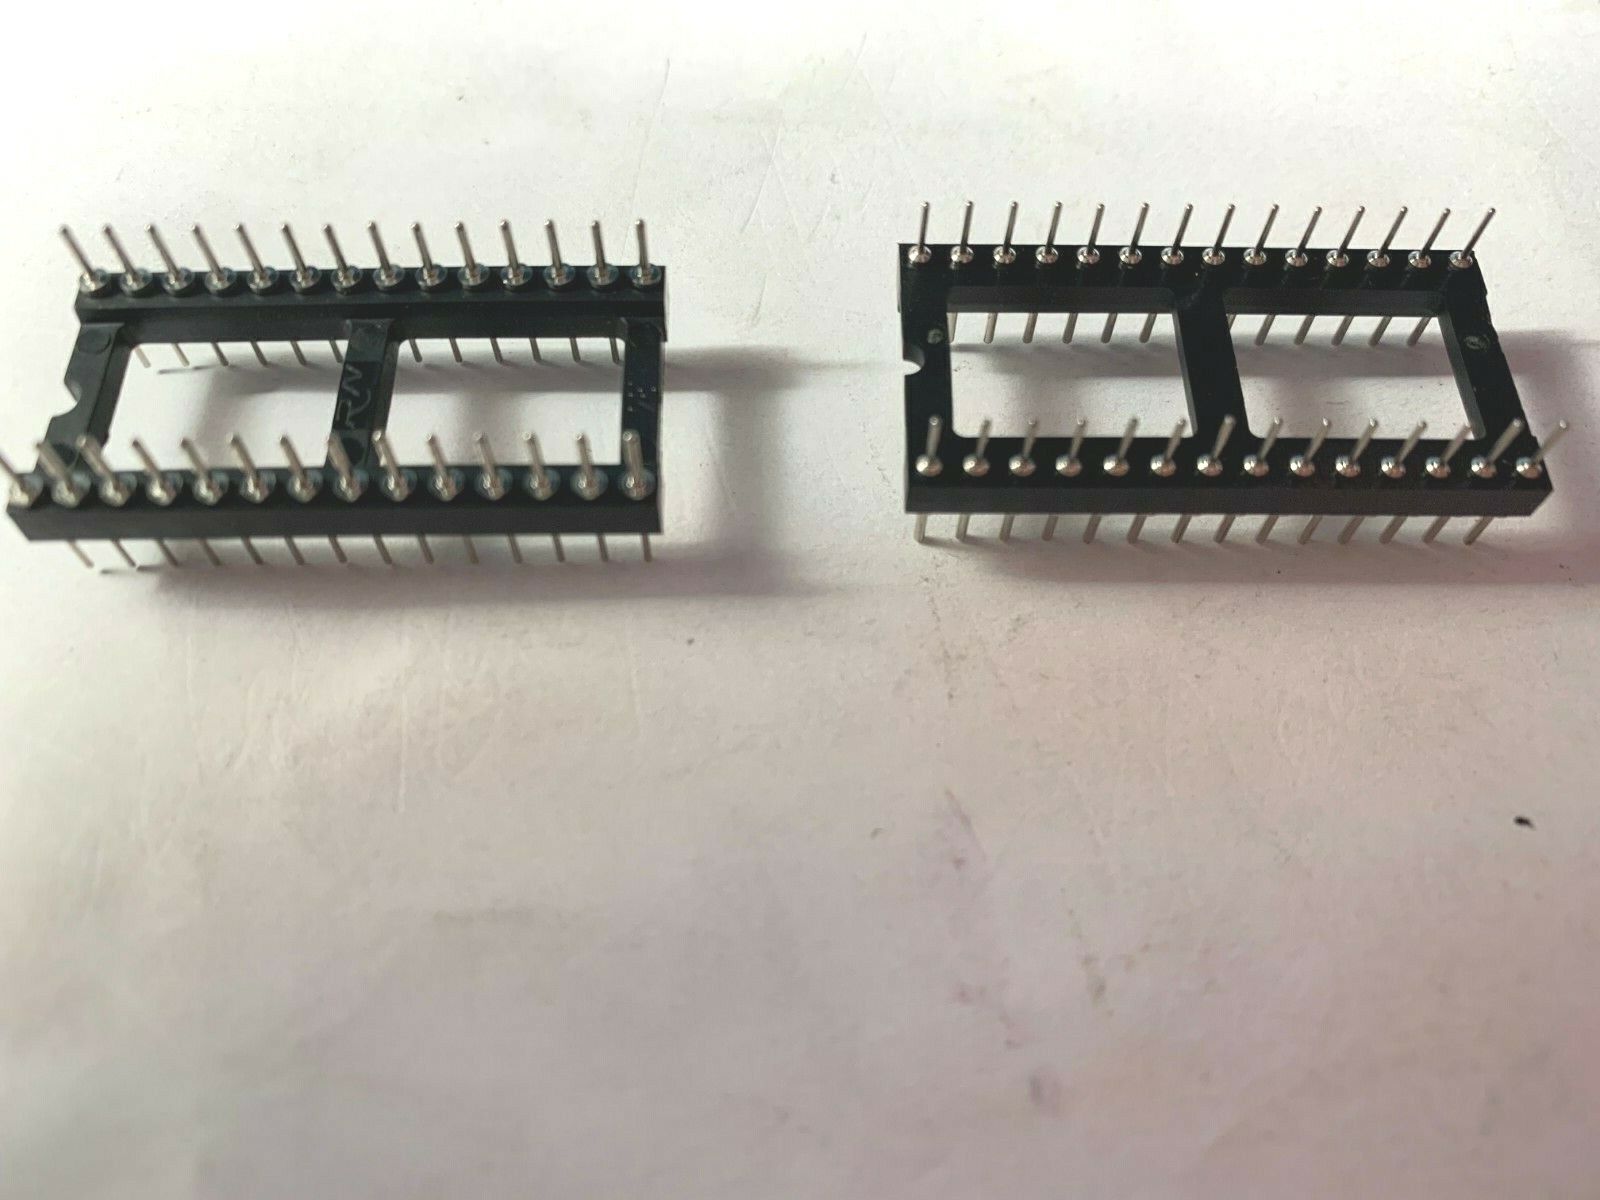  Connector Header Platform 28 pin 